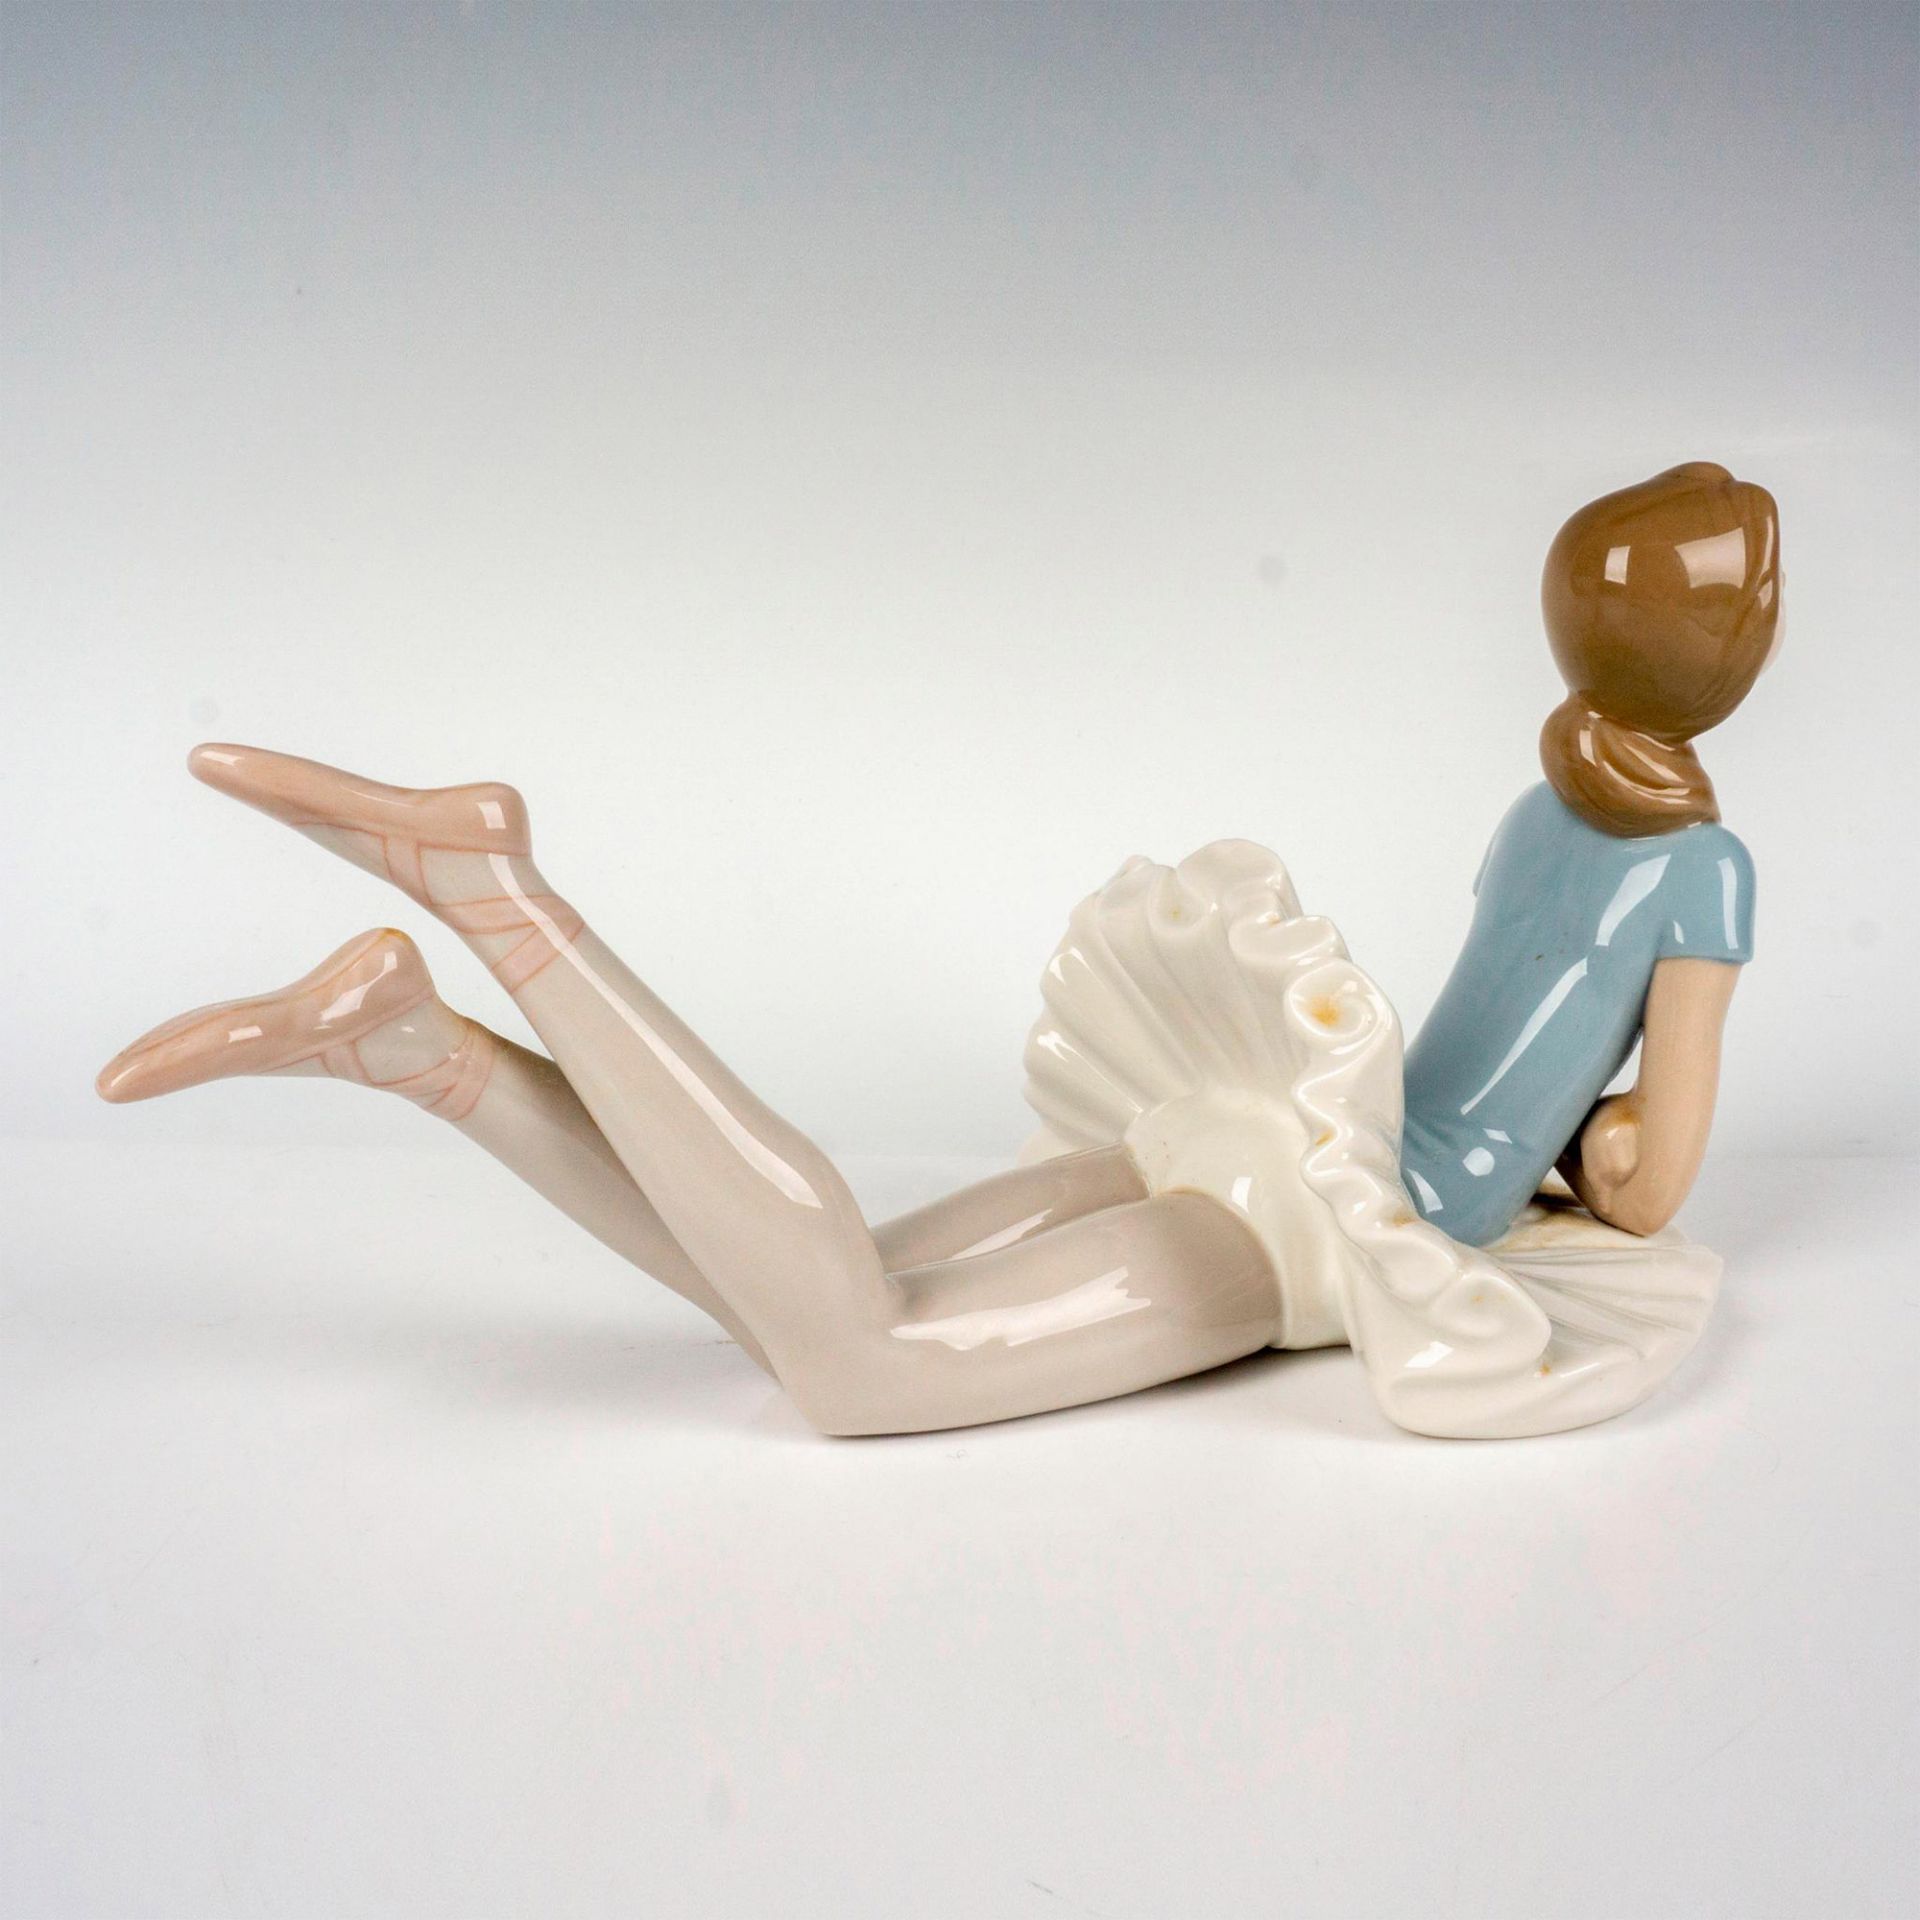 Heather 1001359 - Lladro Porcelain Figurine - Image 2 of 4